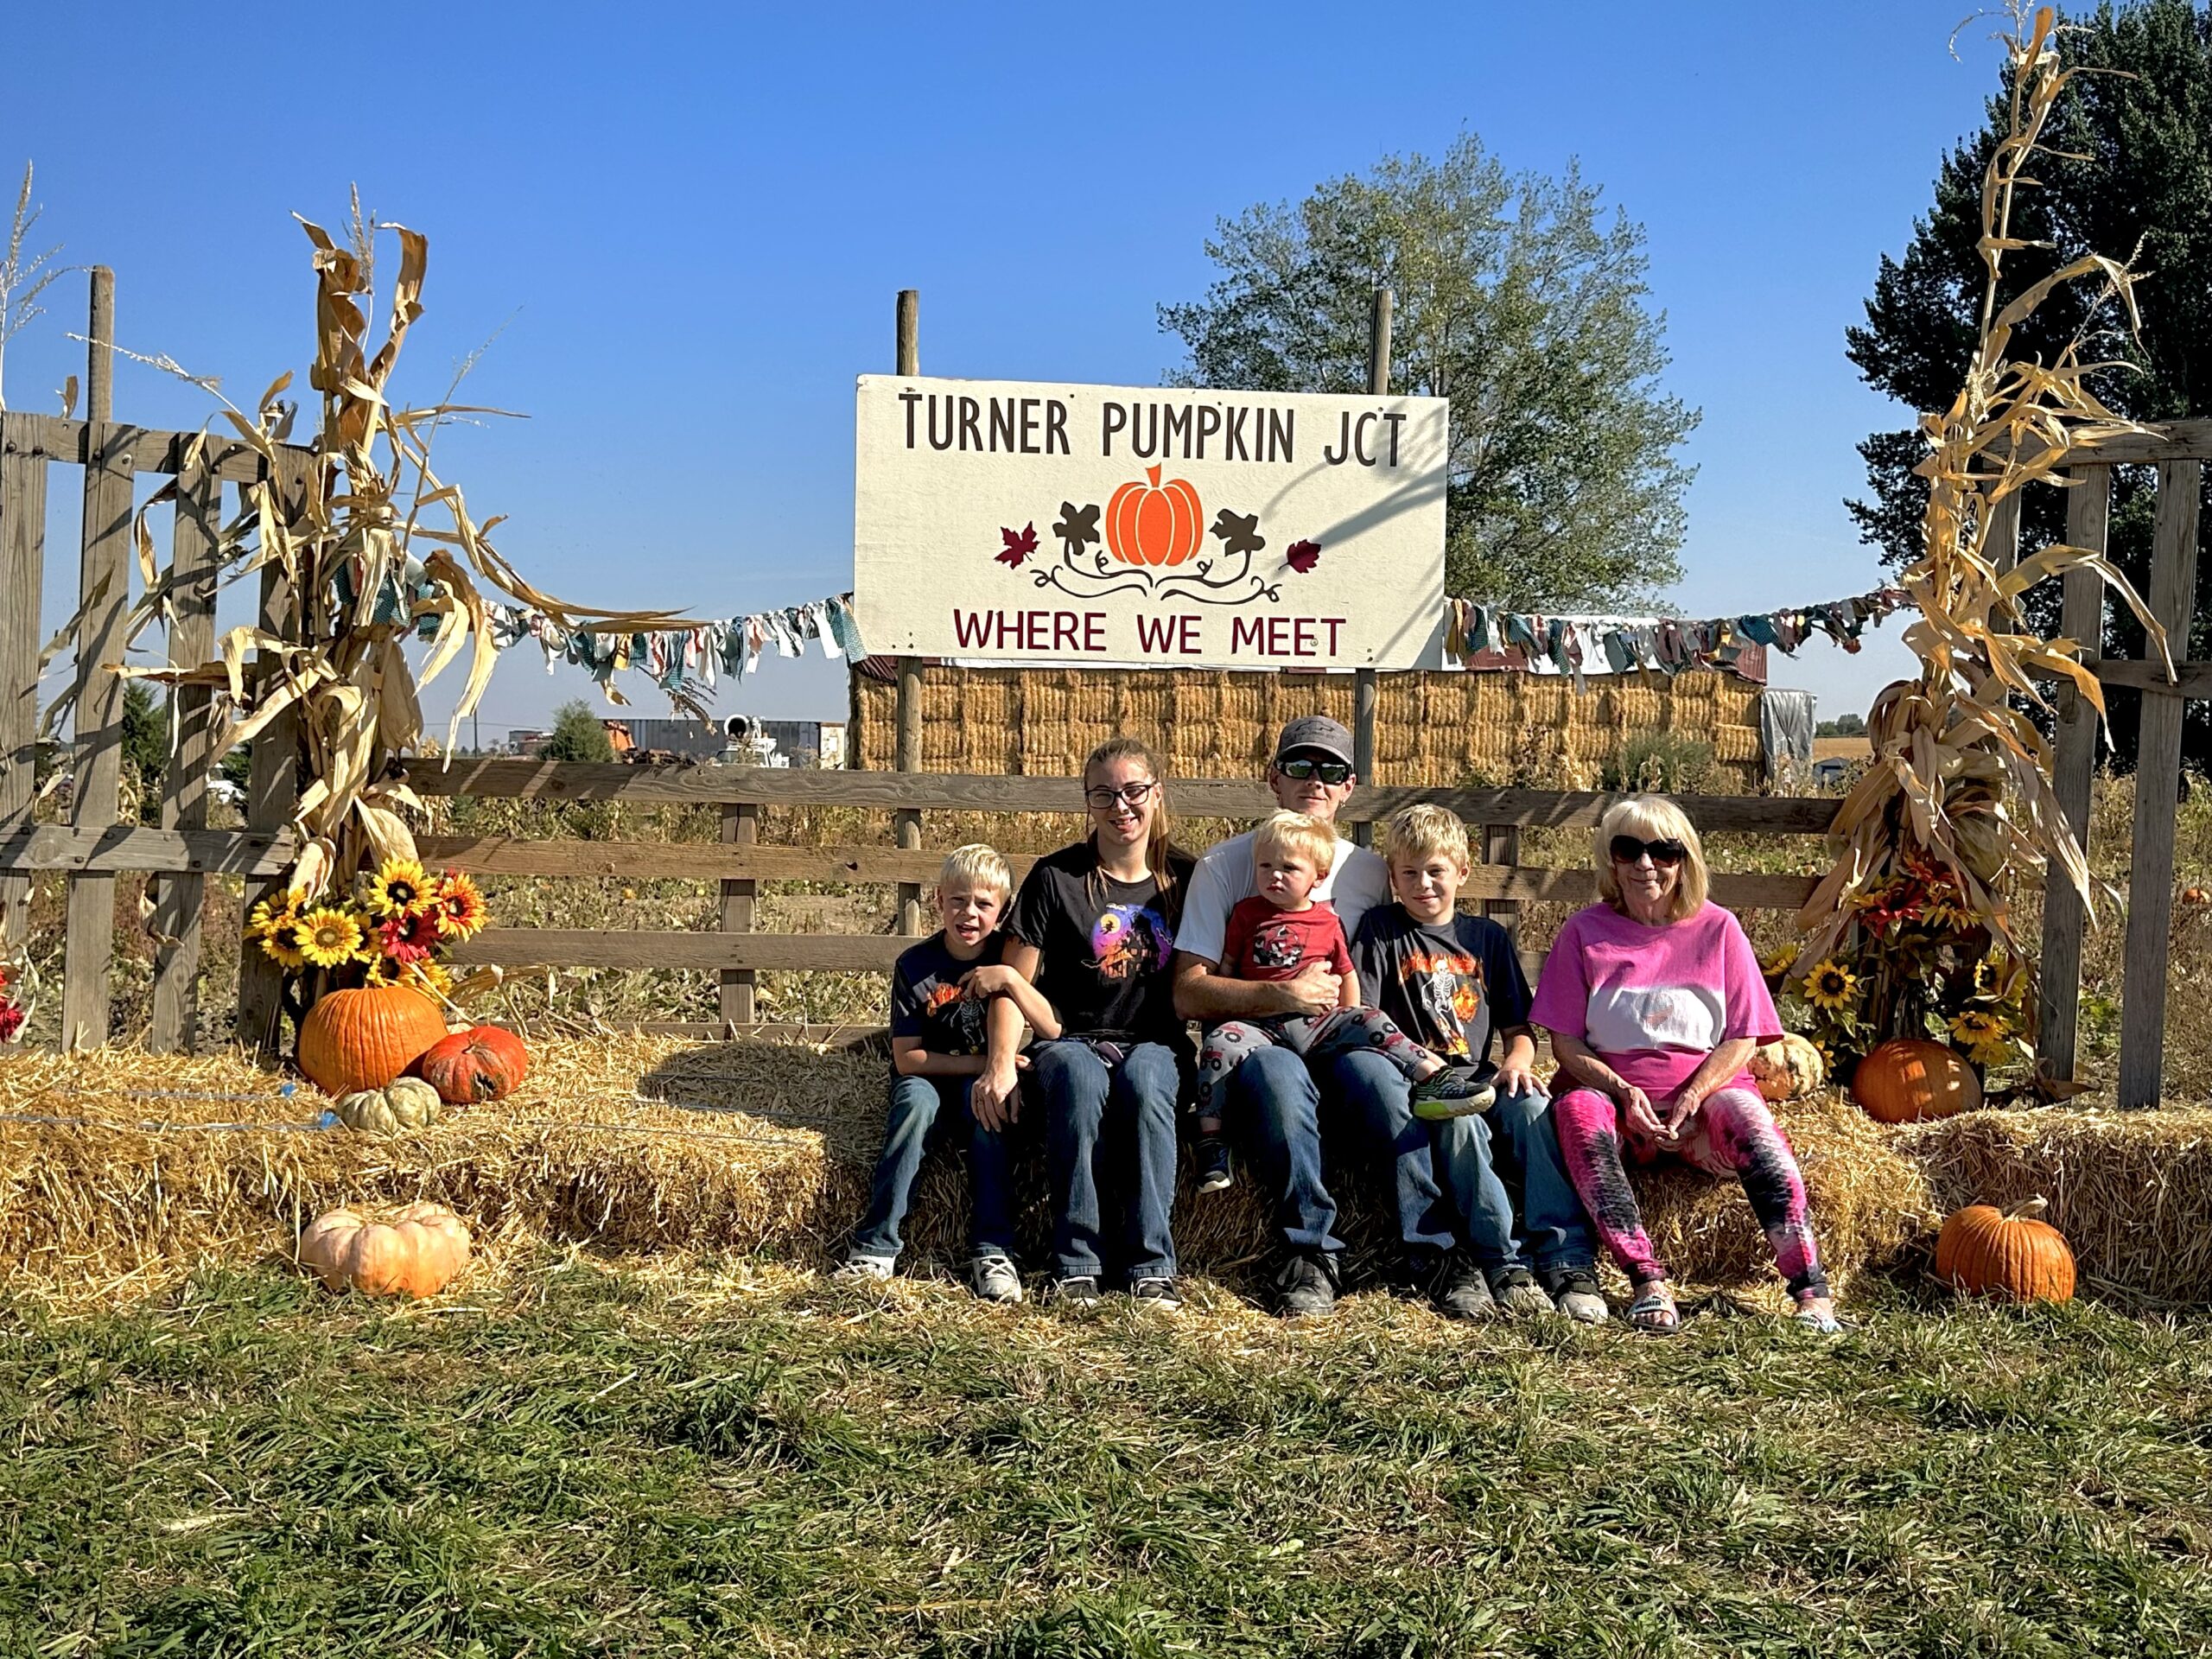 Turner pumpkin junction -133